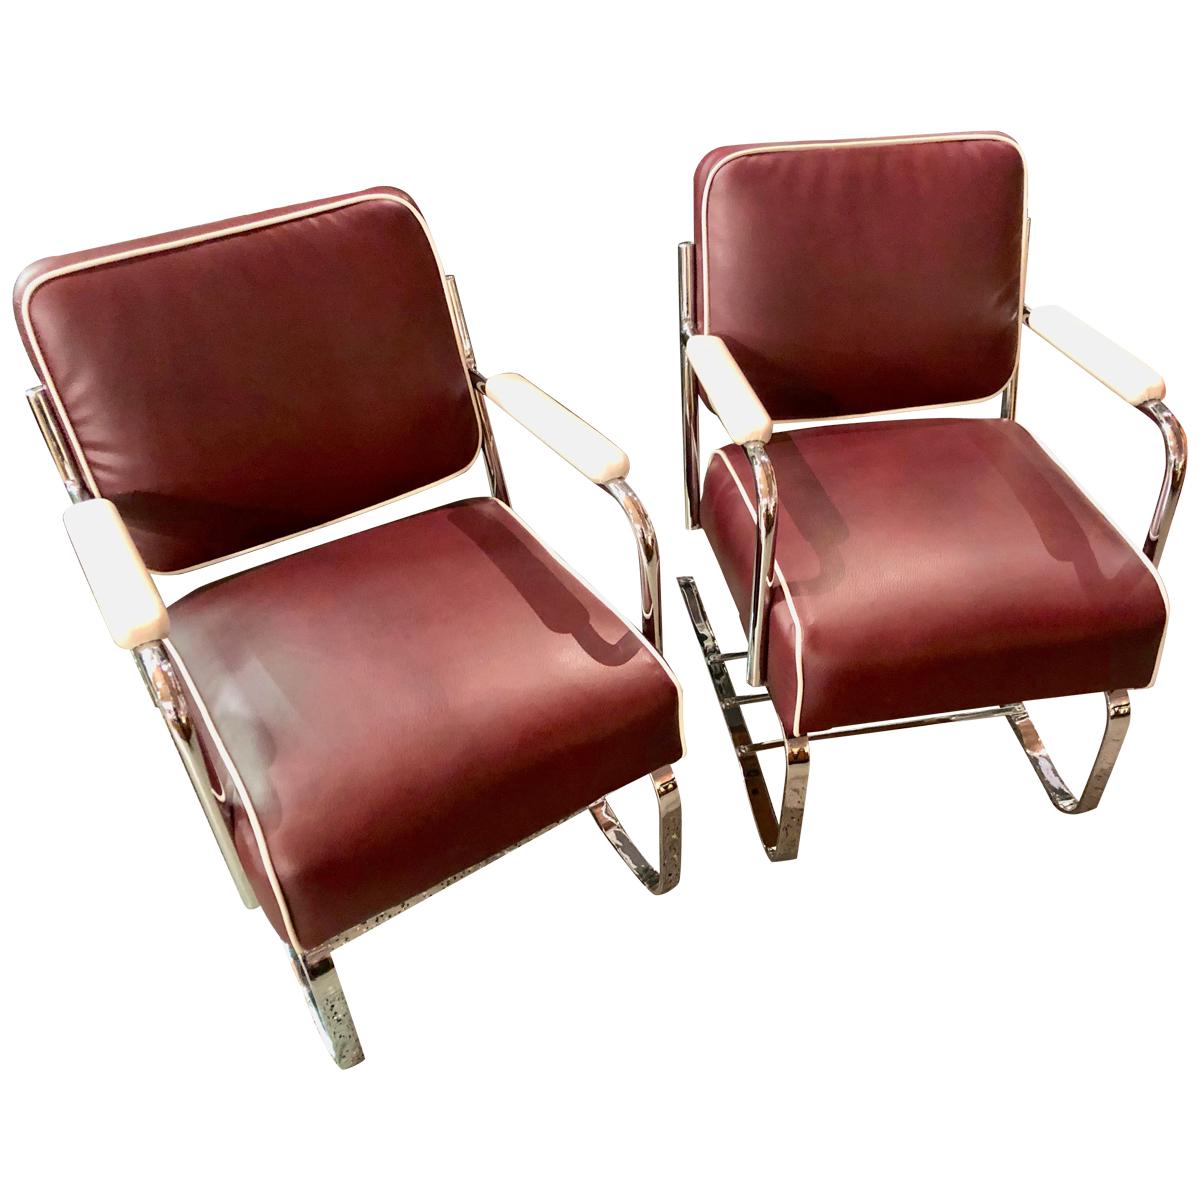 Restored Flexible Metal Two-Tone Art Deco Club Chairs